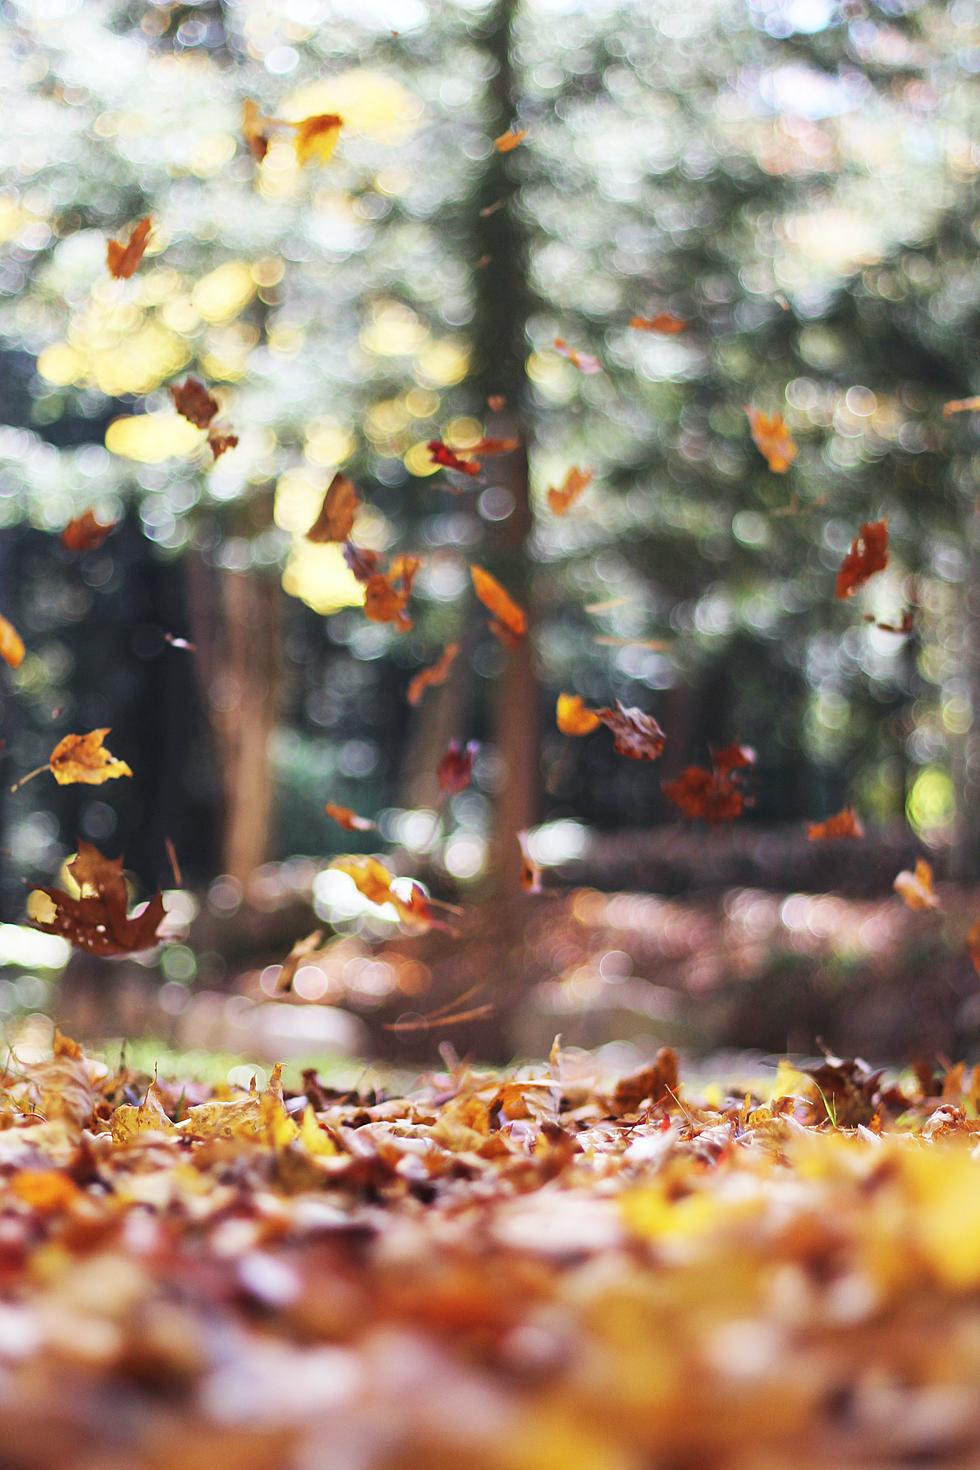 Autumn in Idaho: A Poem